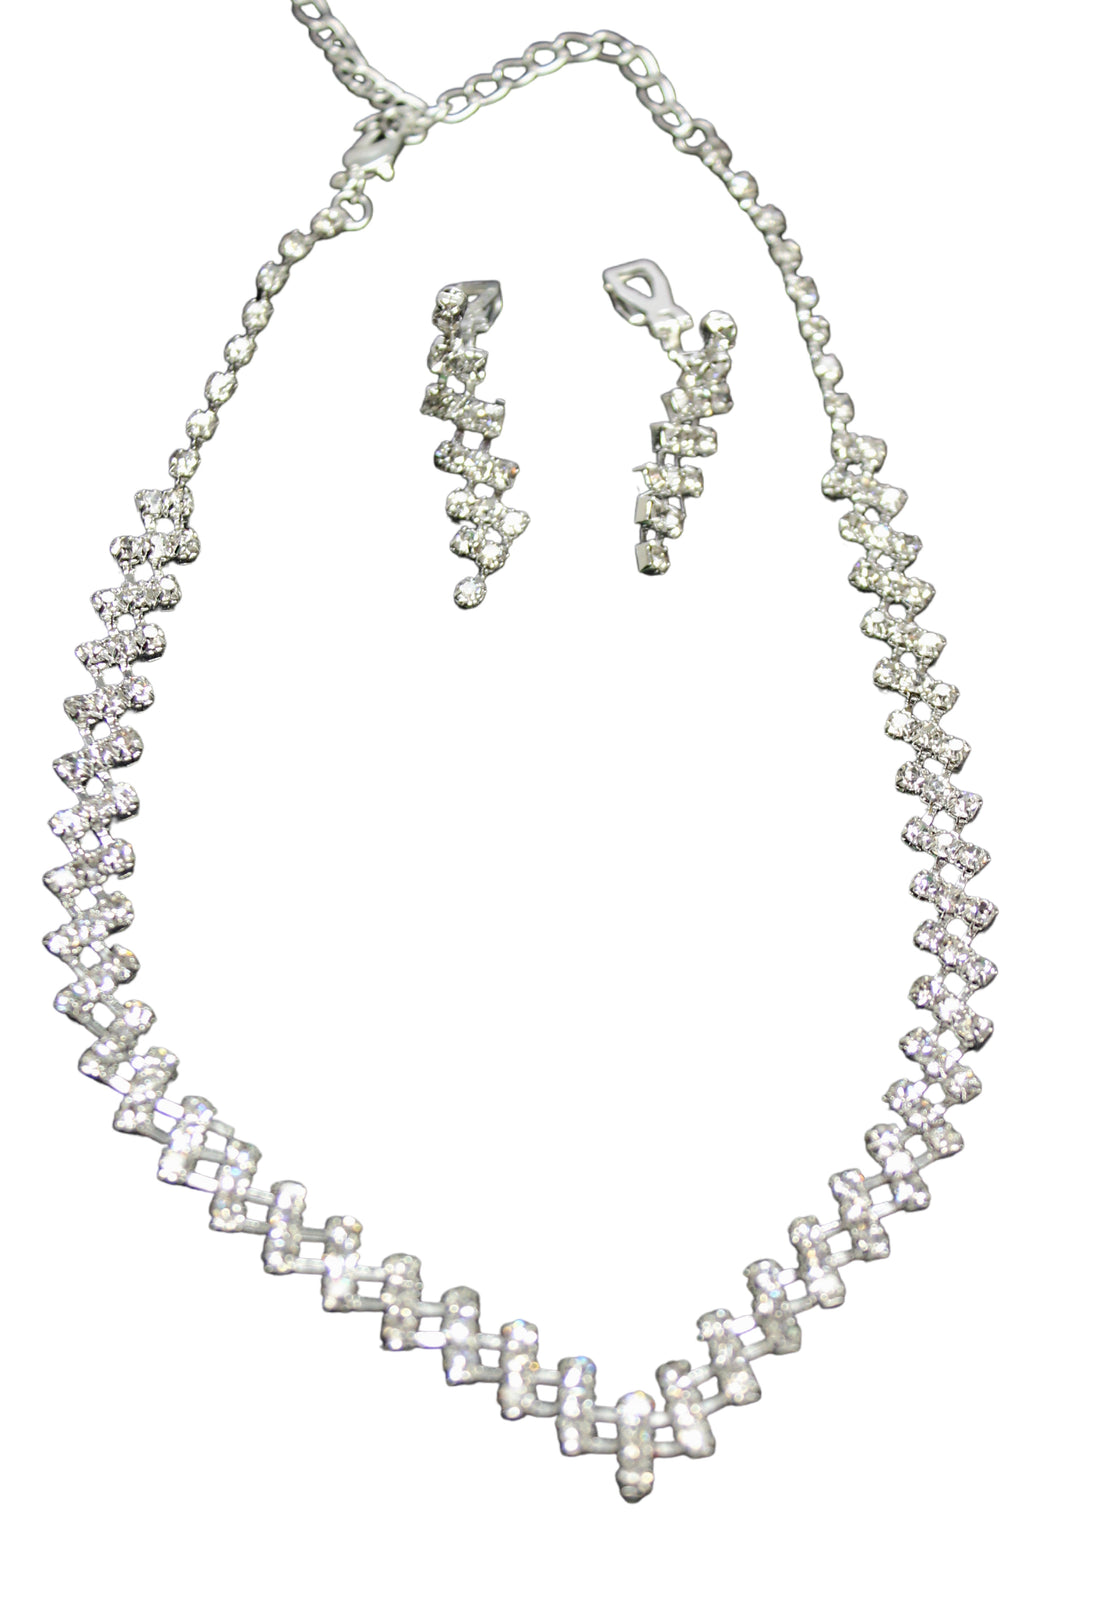 Swarovski Crystal Earring Necklace set TL3027 (Clip on)